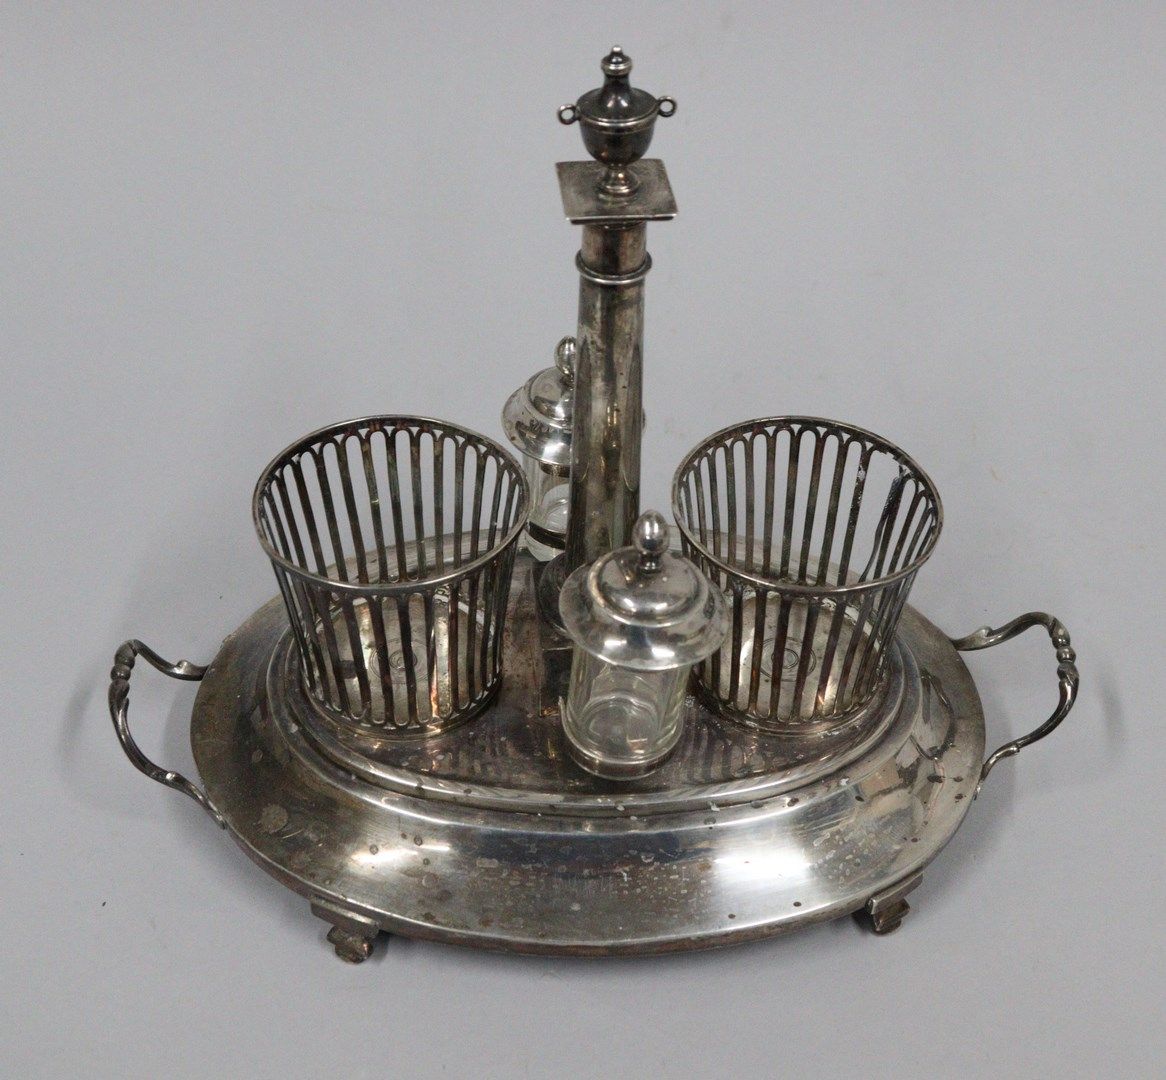 Null 银质油坩埚和醋架，标记为巴黎，时间为1781-1789年。
重量：750克 - 玻璃器皿，破损的塞子支撑。